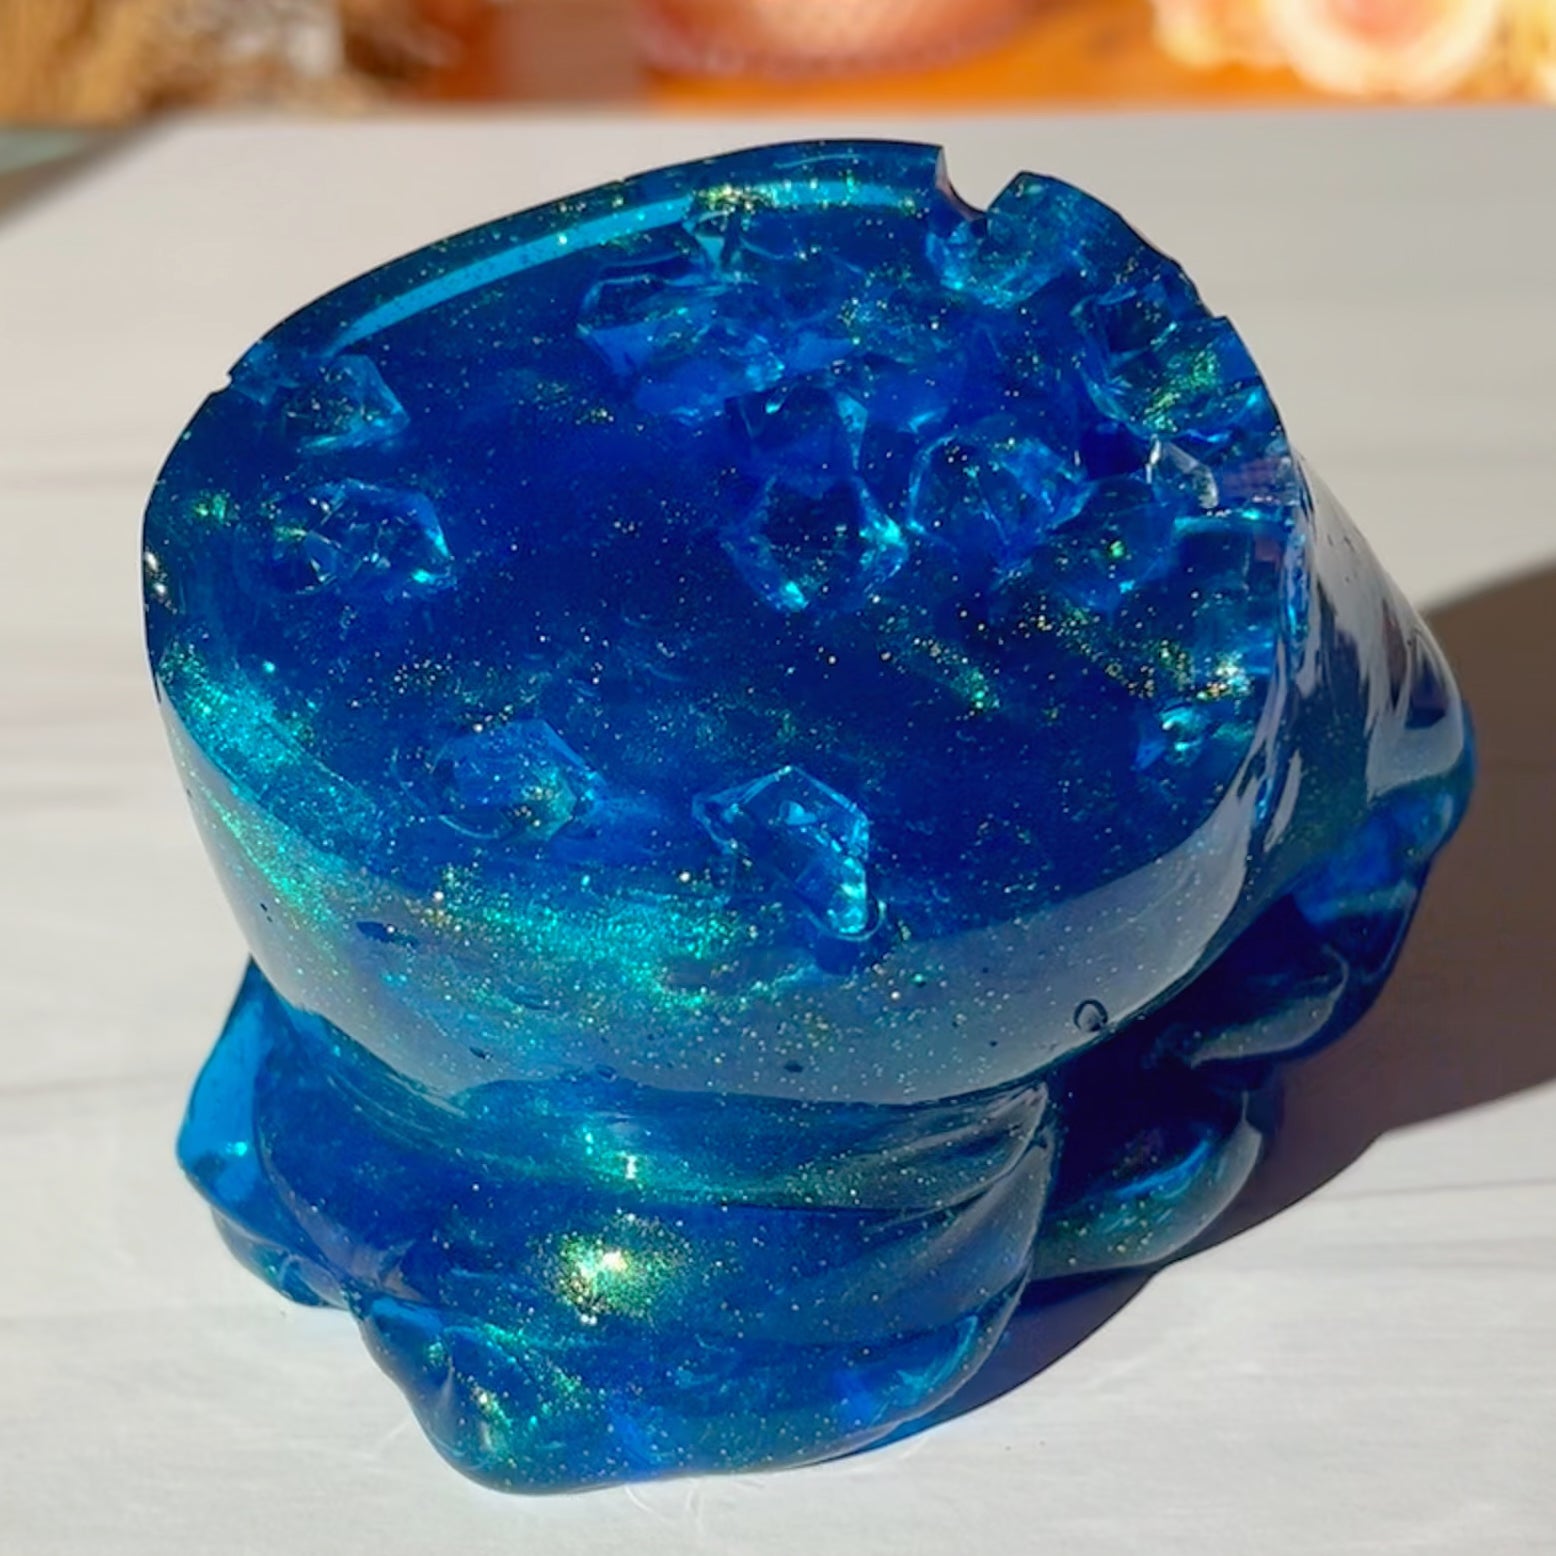 King Tuts Lost Treasure Egypt Blue Lapis Lazuli Clear Pigmented Slime Slime Fantasies Shop Unboxed